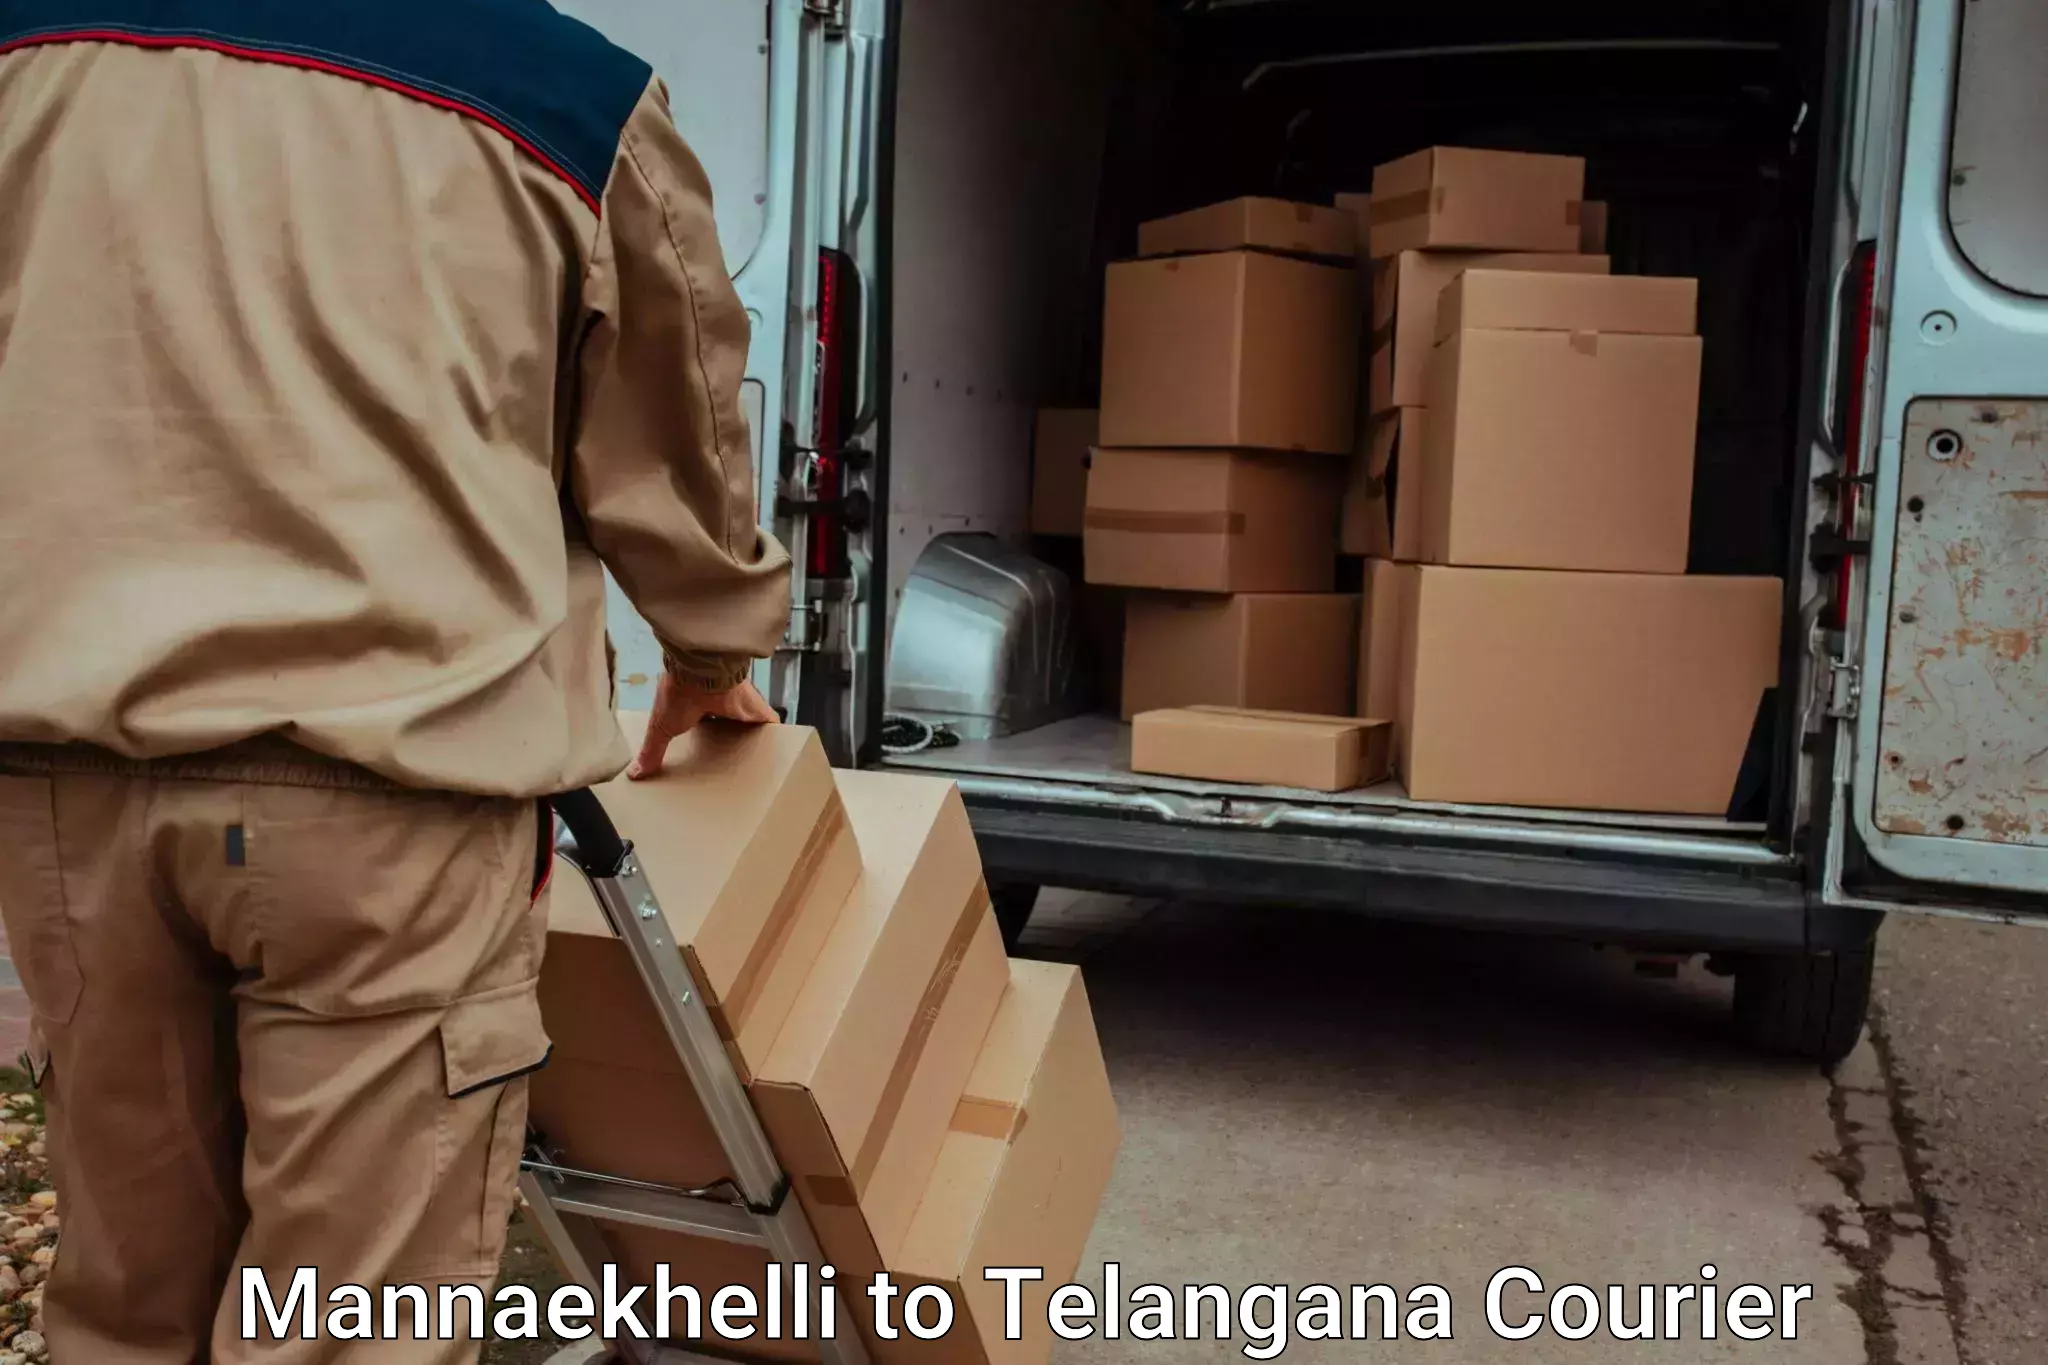 Professional movers and packers Mannaekhelli to Telangana